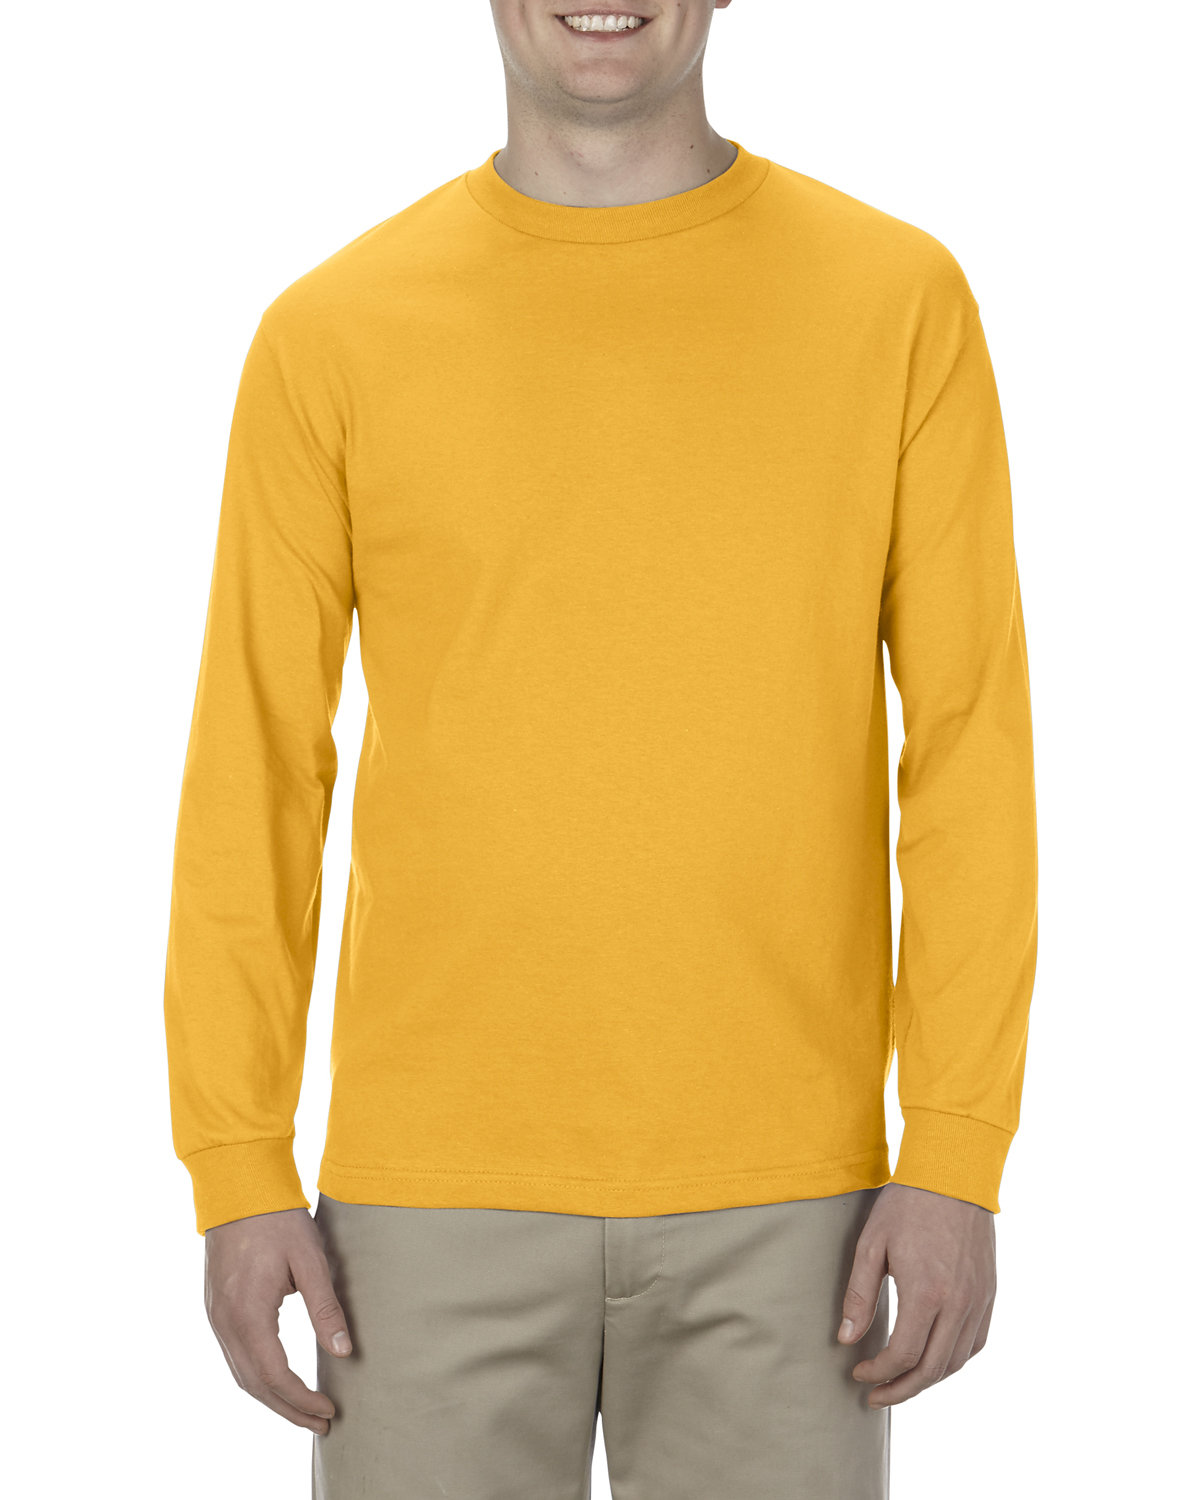 American Apparel Adult Long-Sleeve T-Shirt gold 